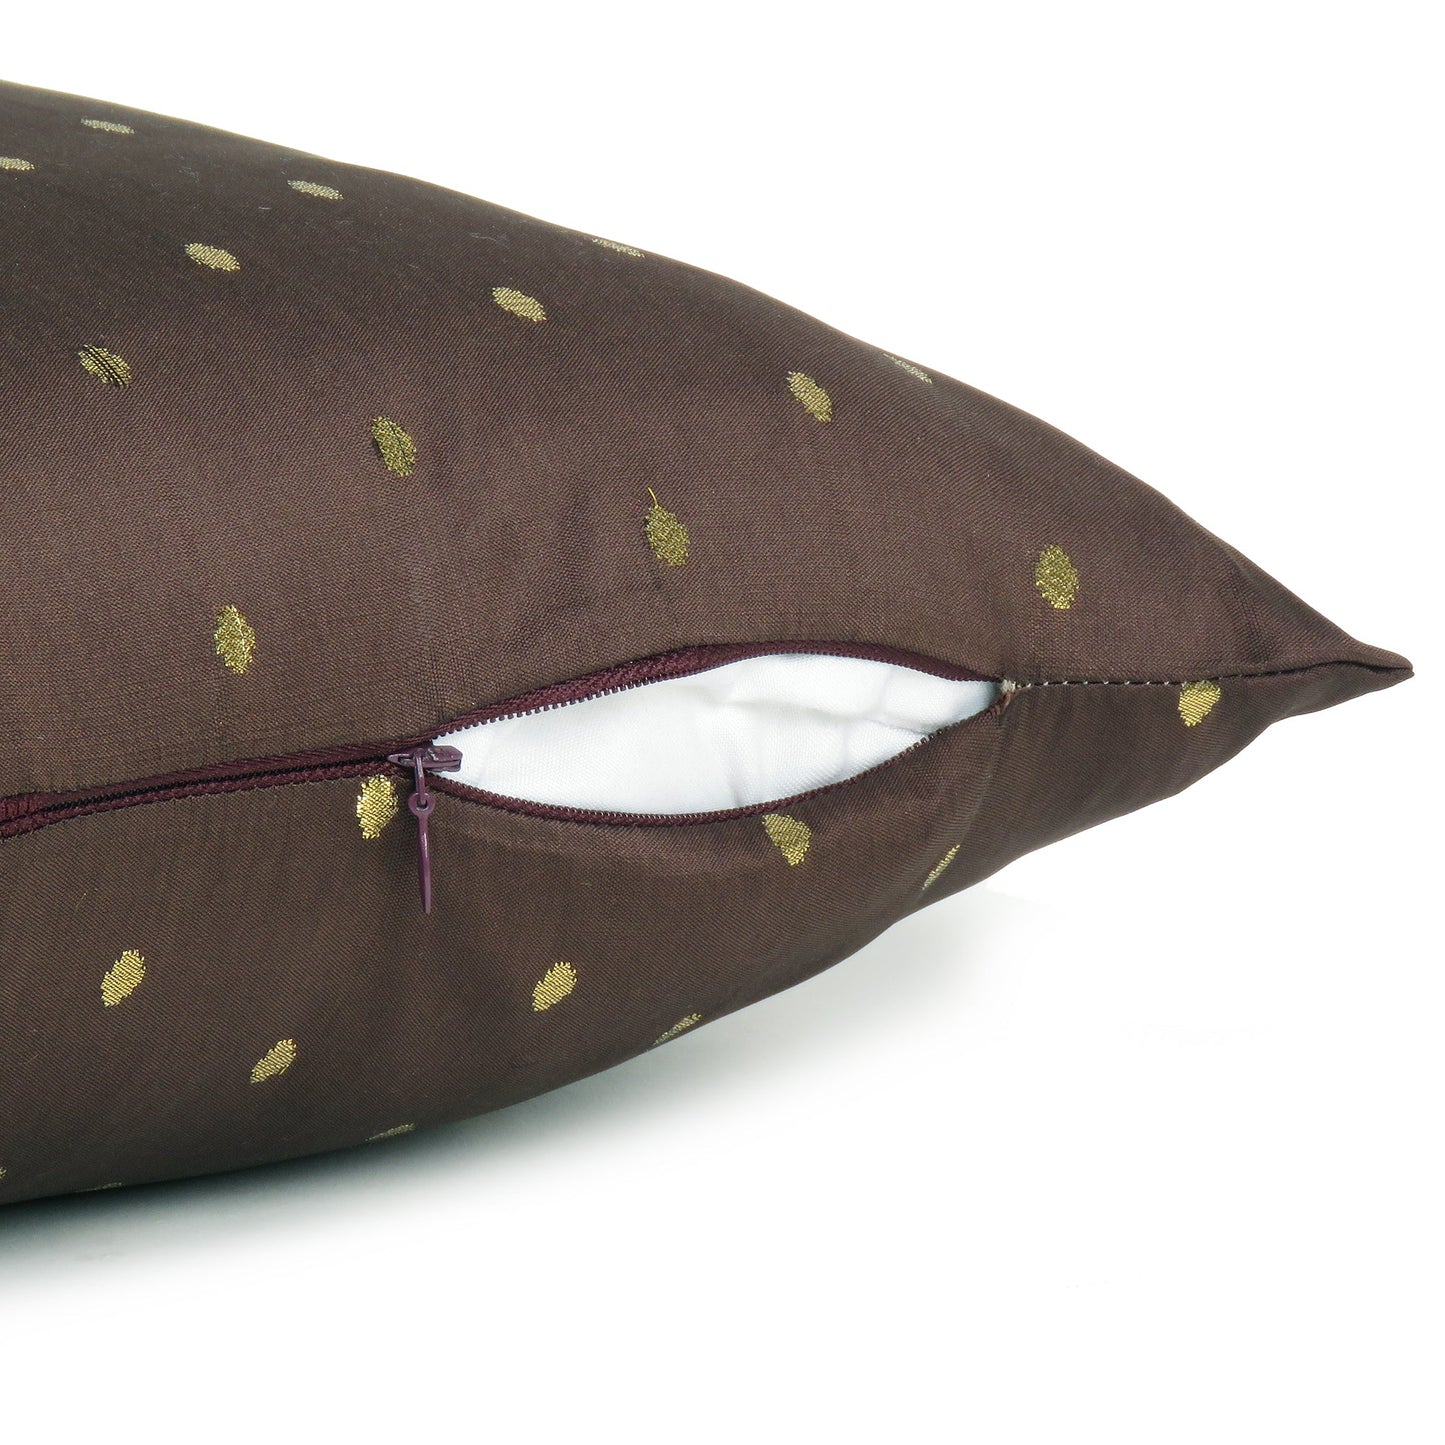 Art Silk Polka Dot Cushion Cover in Set of 2 - Chocolate Brown